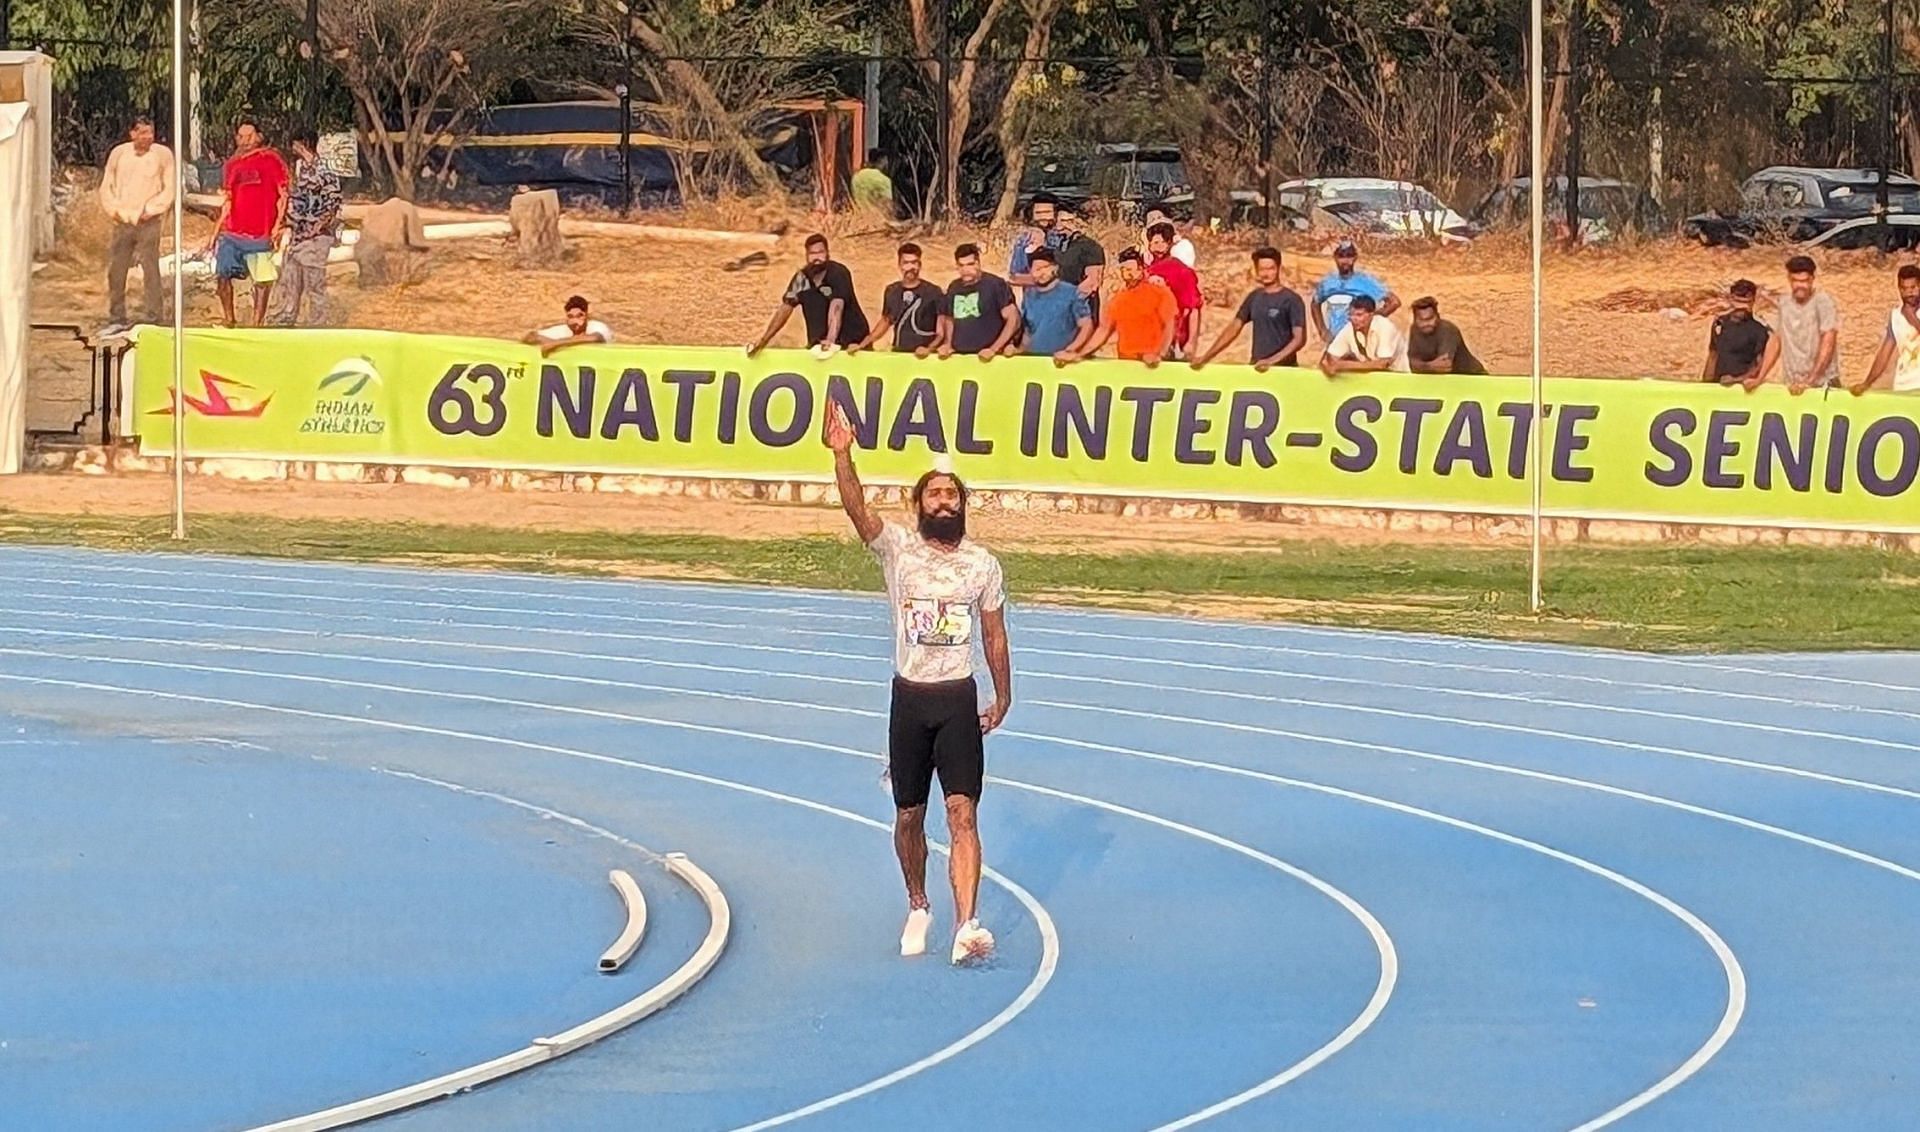 Gurinderveer Singh after winning the 100m final at the Tua Devi Lal Stadium in Panchkula. (Image: Sportskeeda)